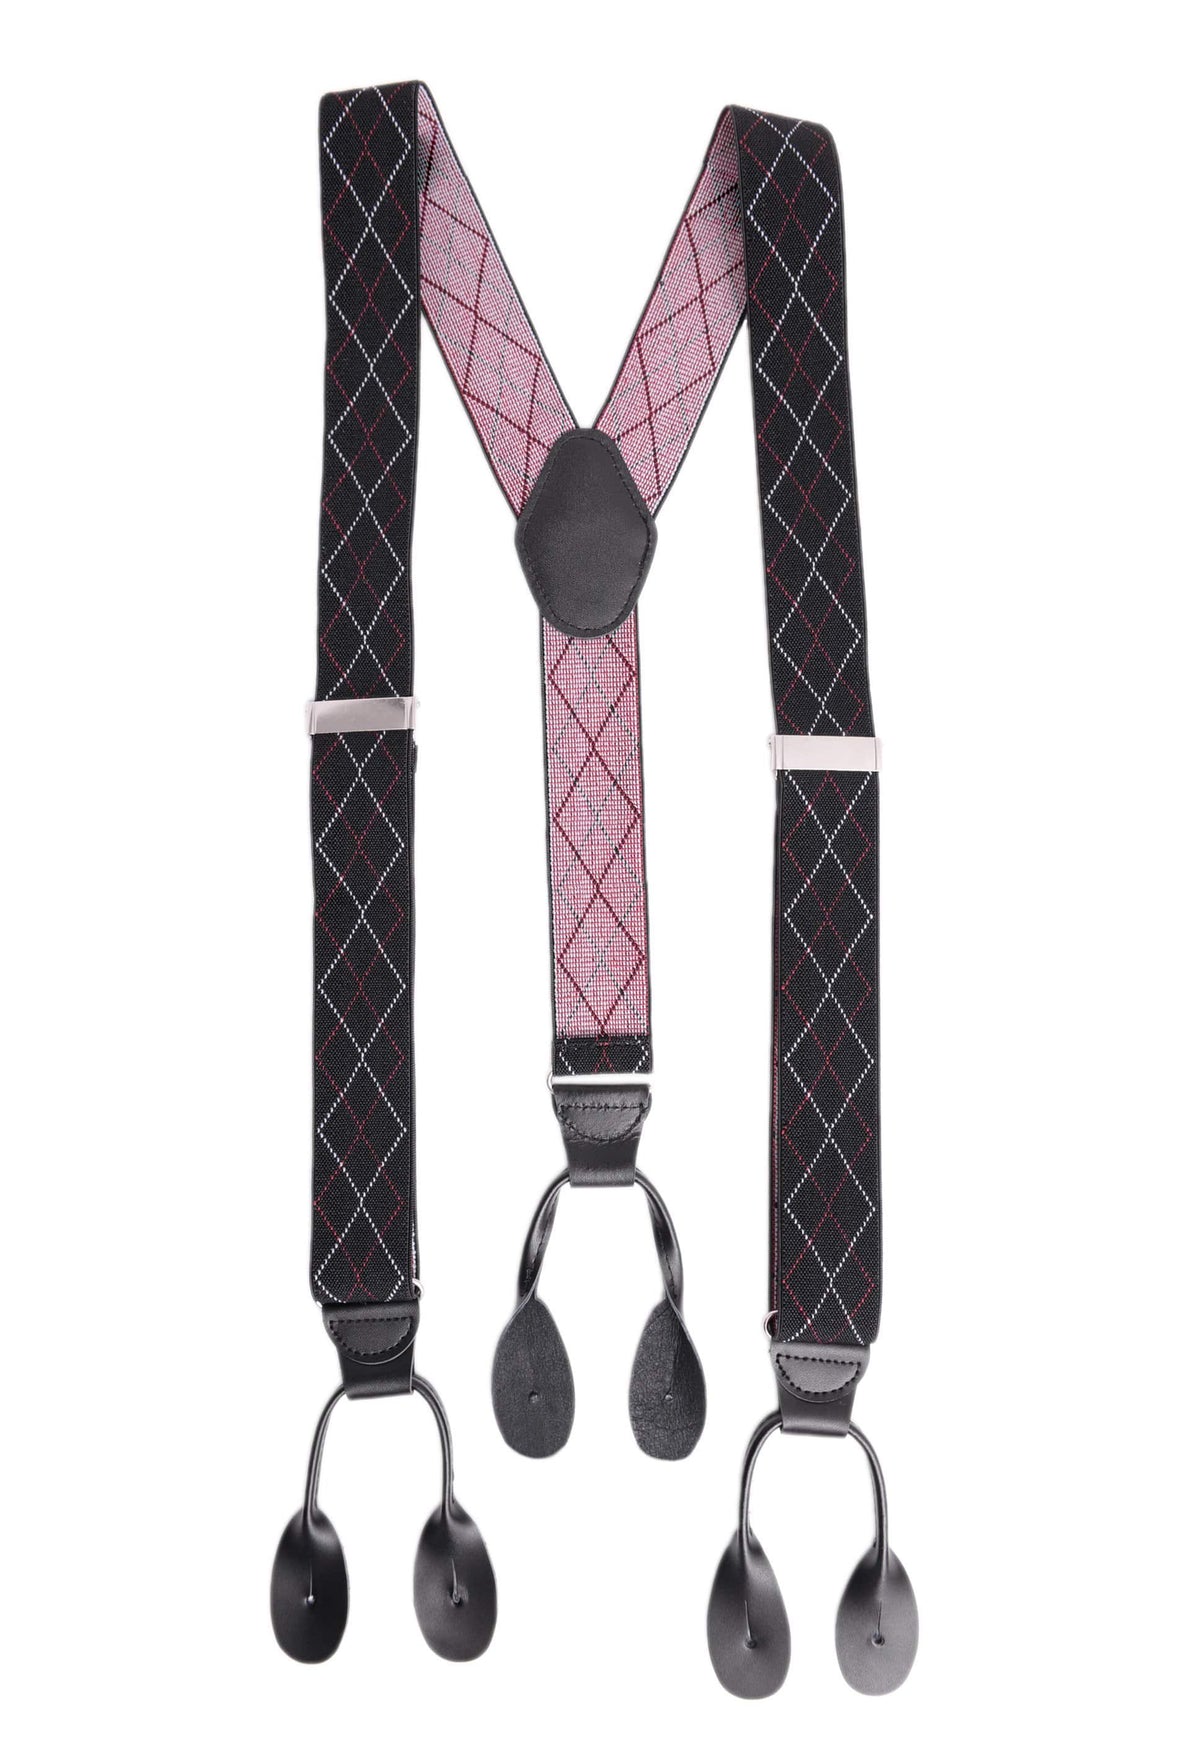 Ariston Suspenders Navy Textured / Regular Mens Button Black Leather Braces Adjustable Y Back Suspenders Xlong Available